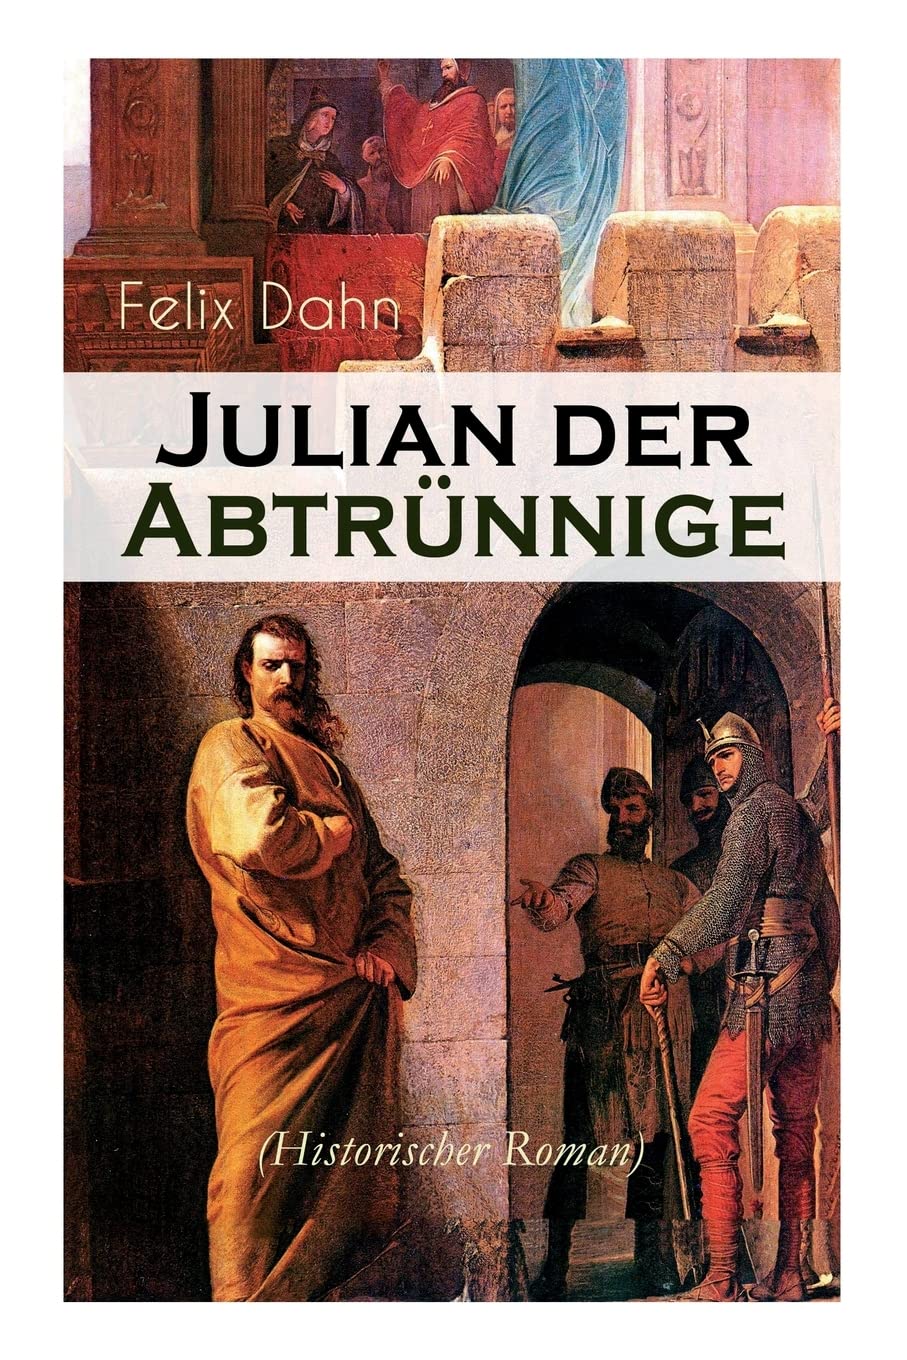 Julian der Abtrünnige cover